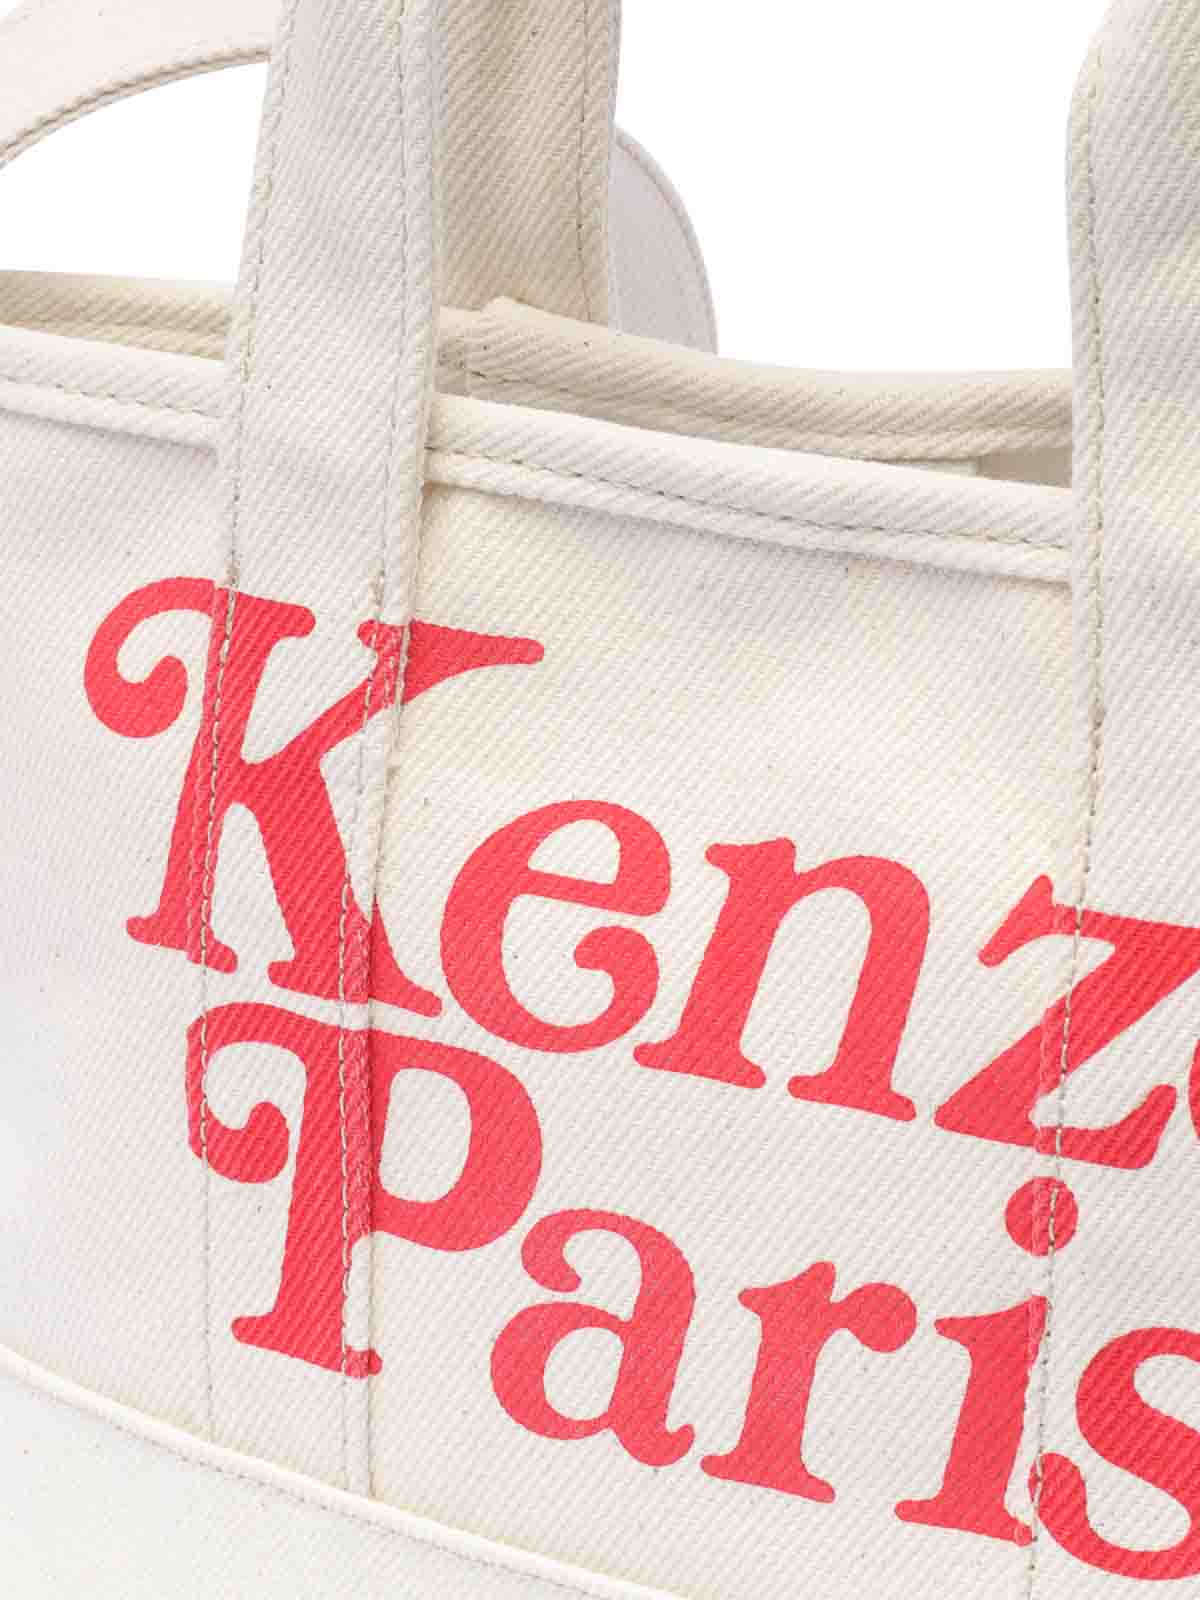 Shop Kenzo Small Paris Bag In Beige